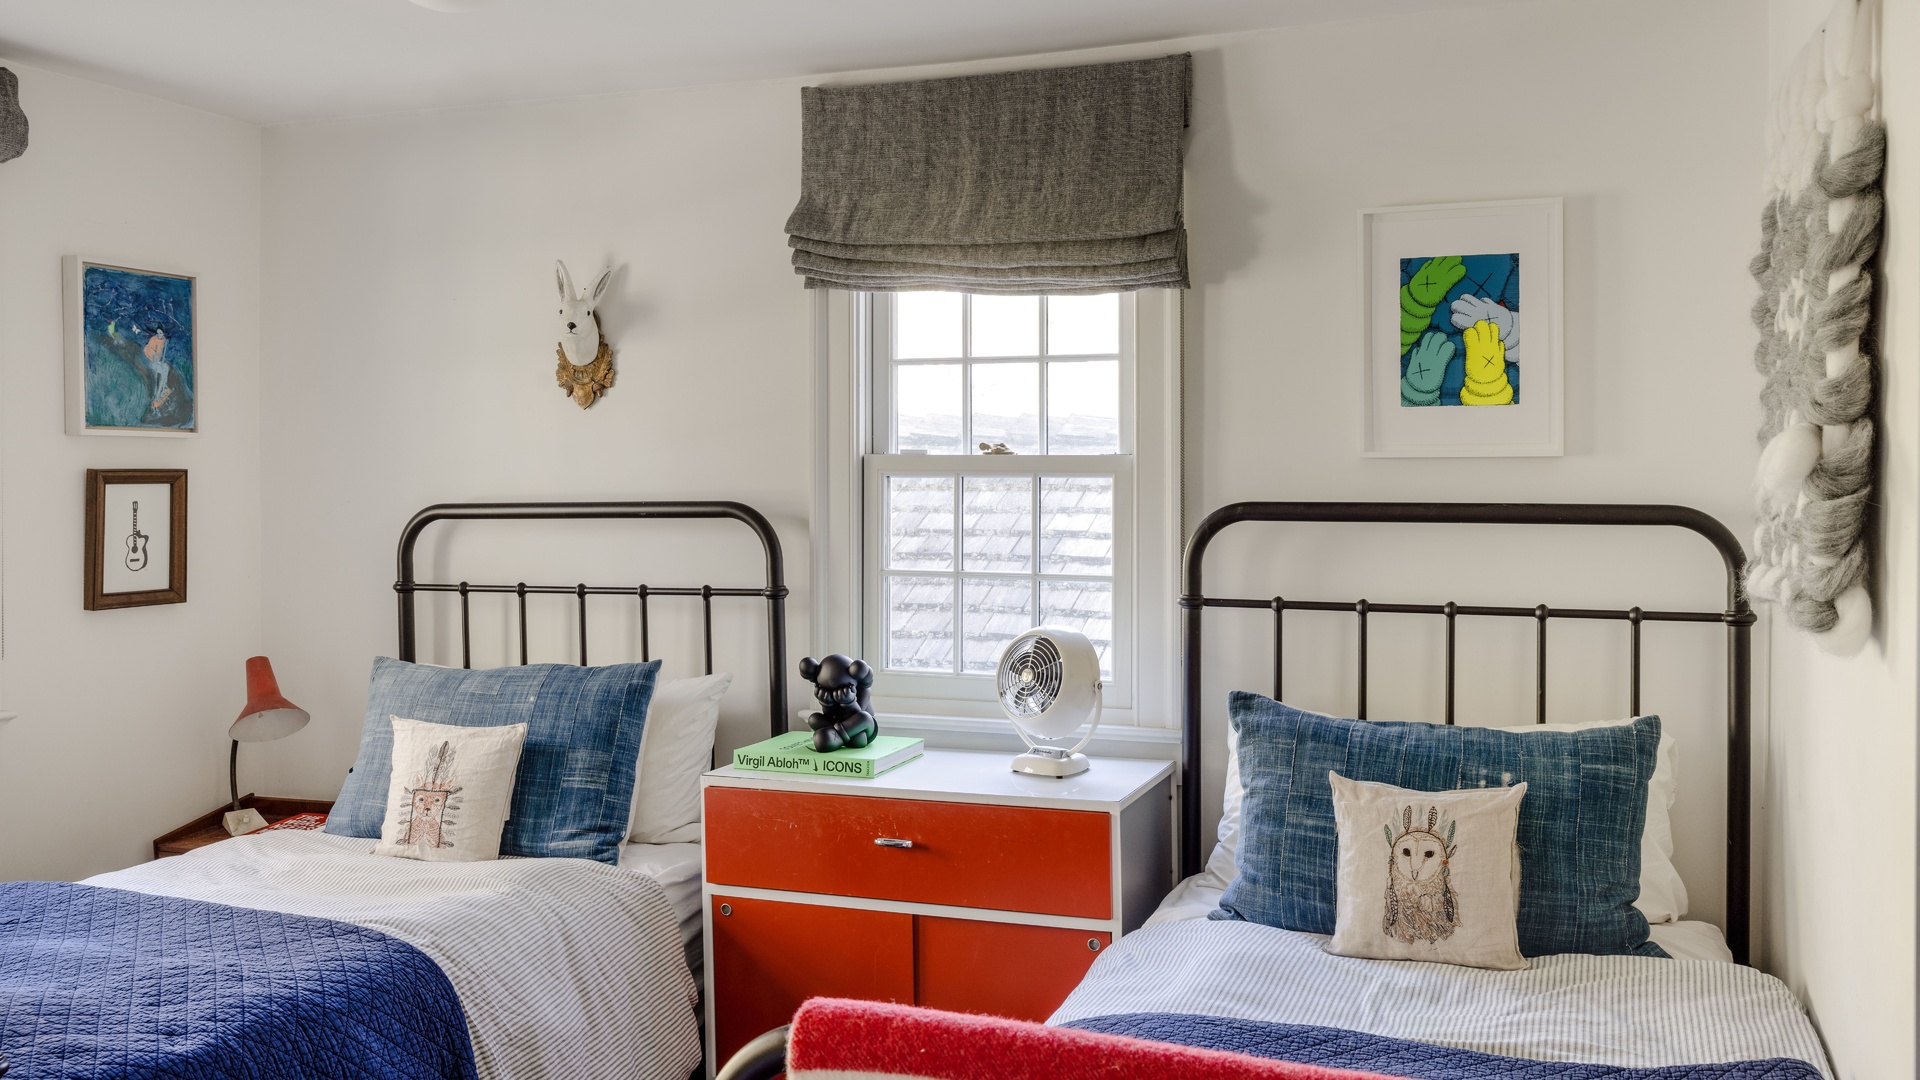 interior, kid-friendly bedroom, furniture, vintage dresser